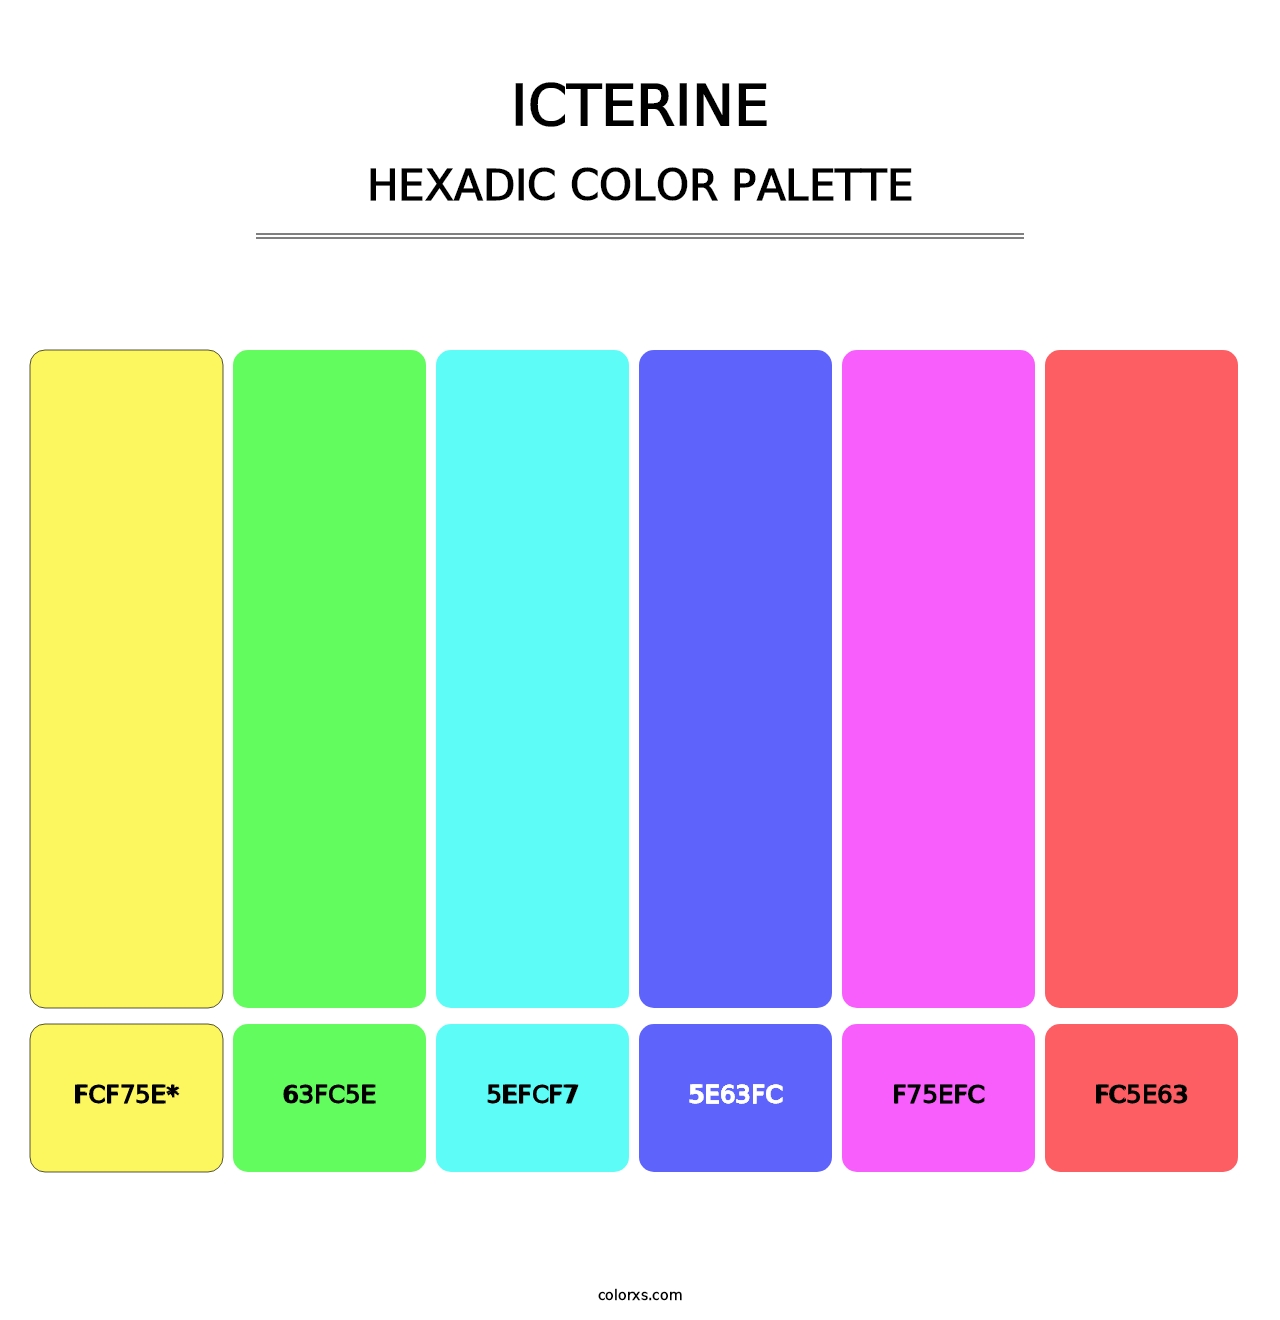 Icterine - Hexadic Color Palette